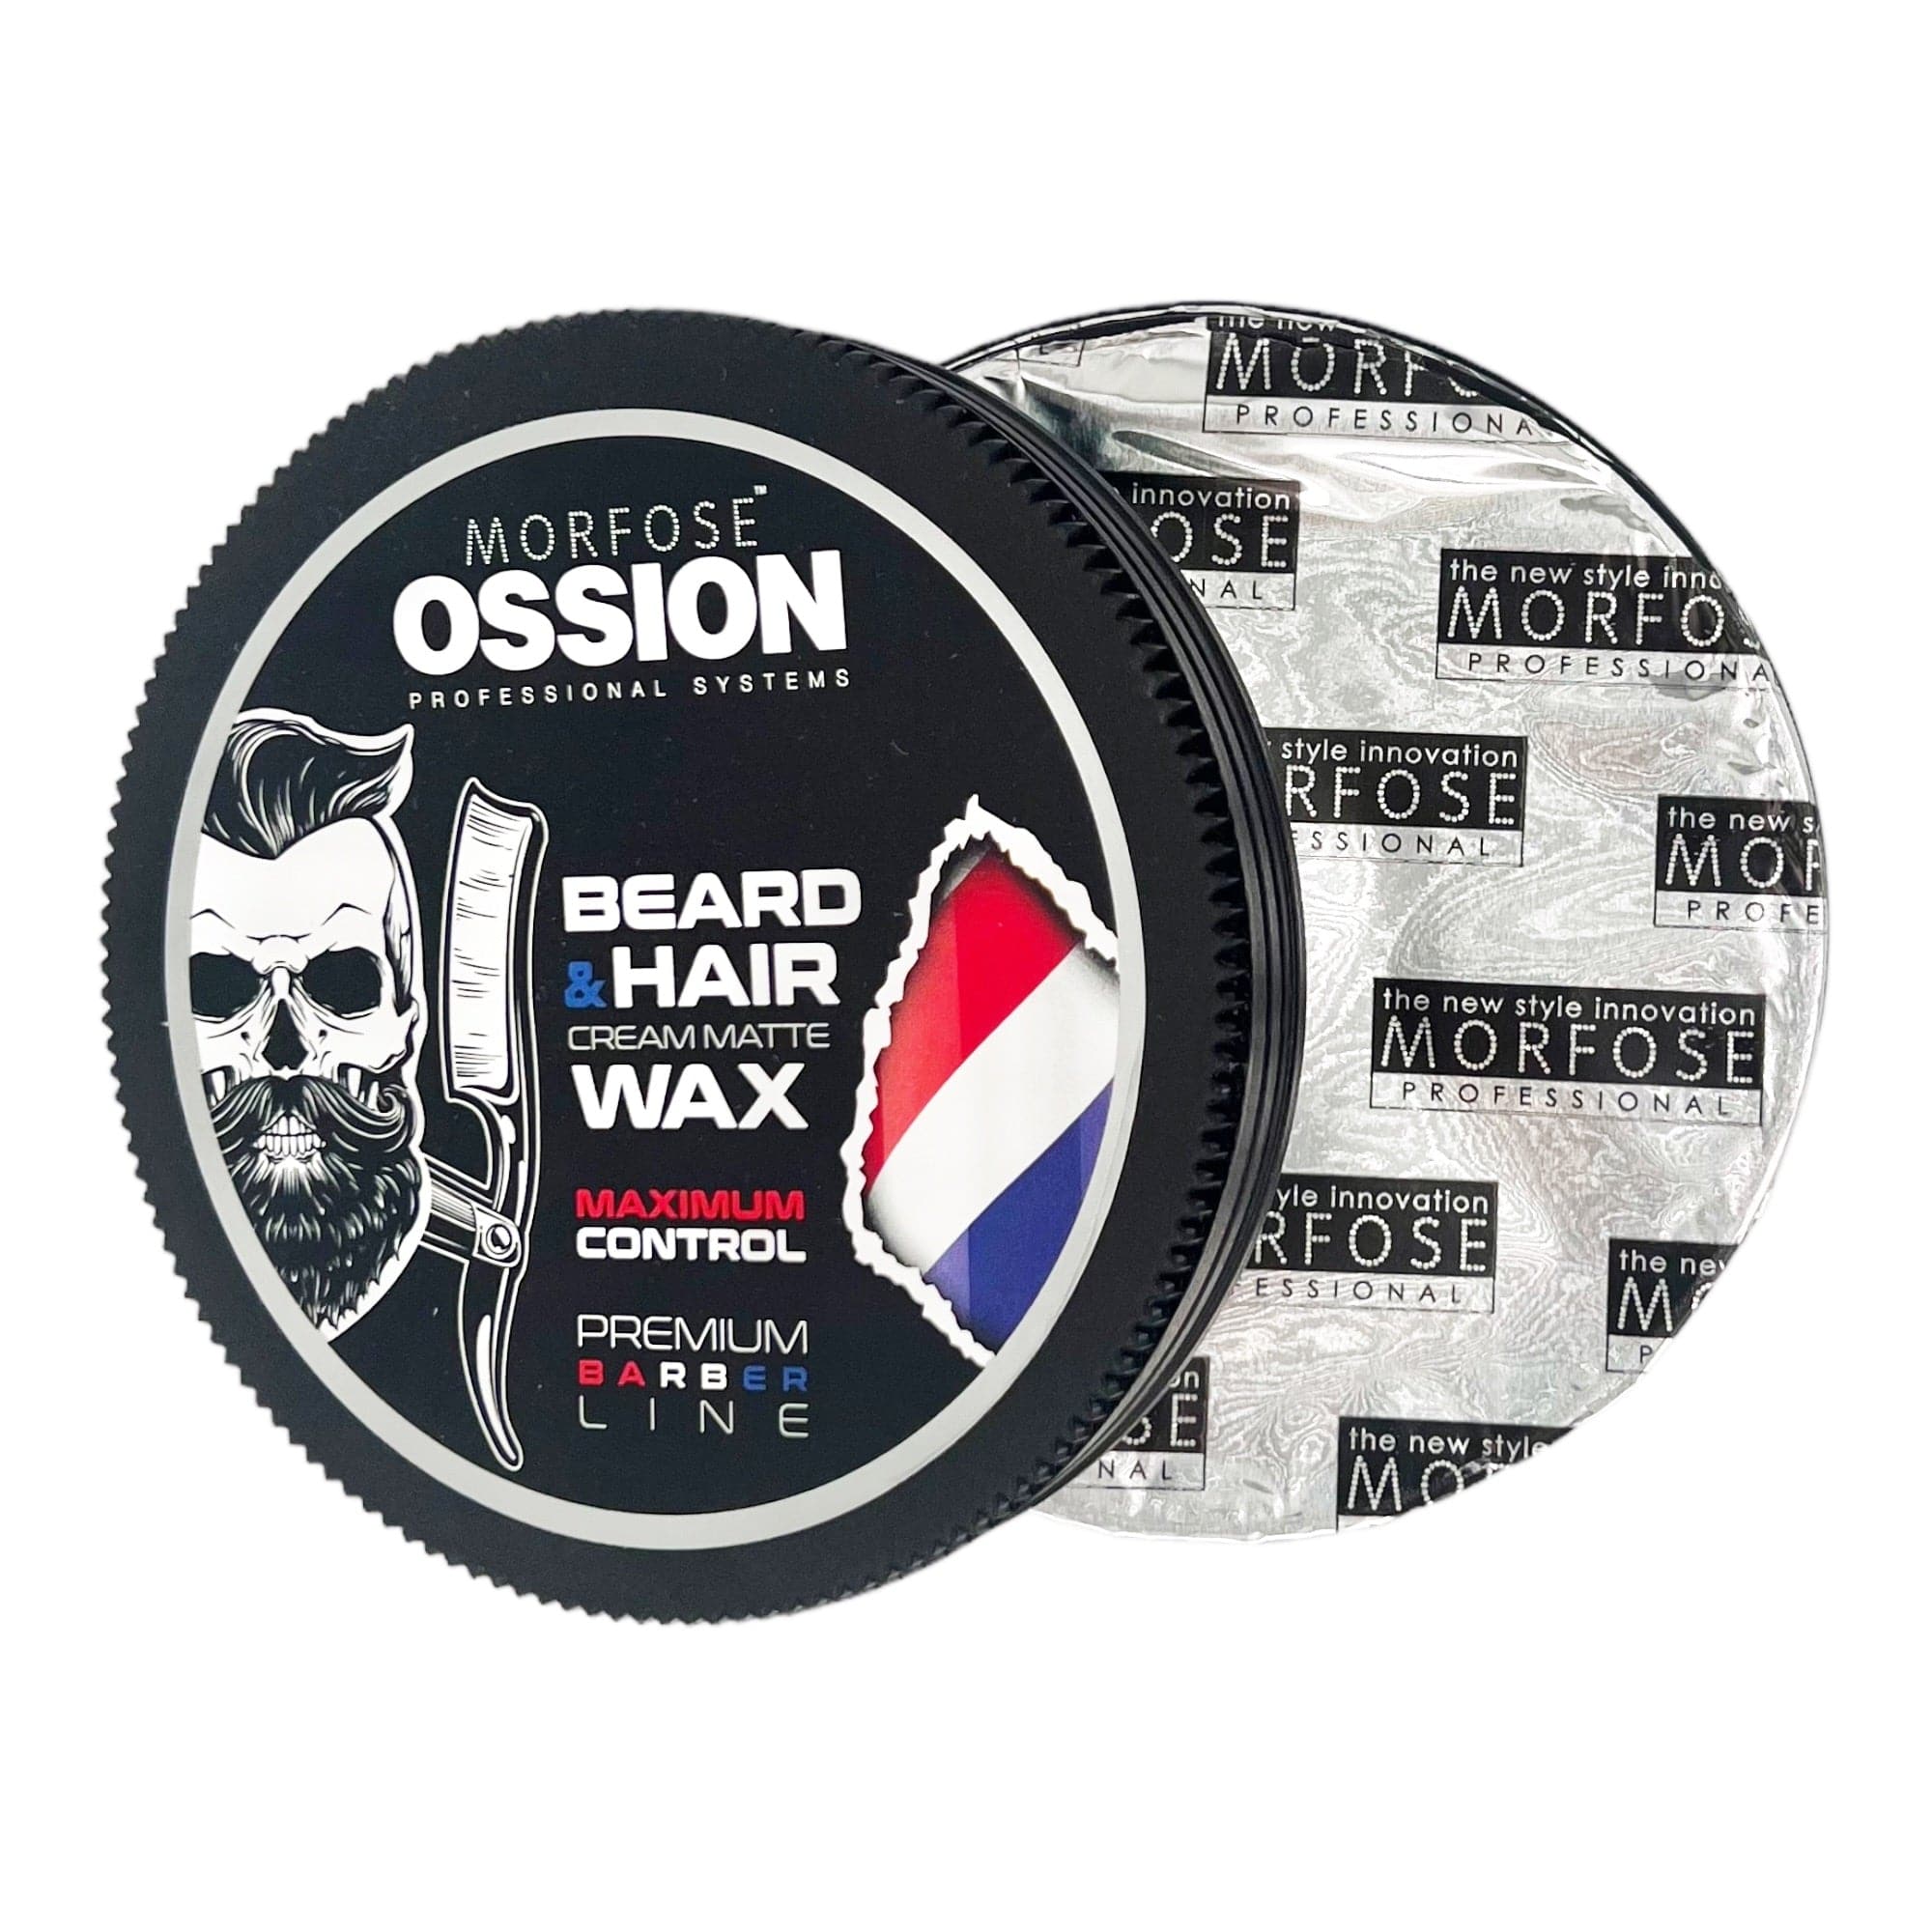 Morfose - Ossion Beard & Hair Cream Matte Wax 175ml